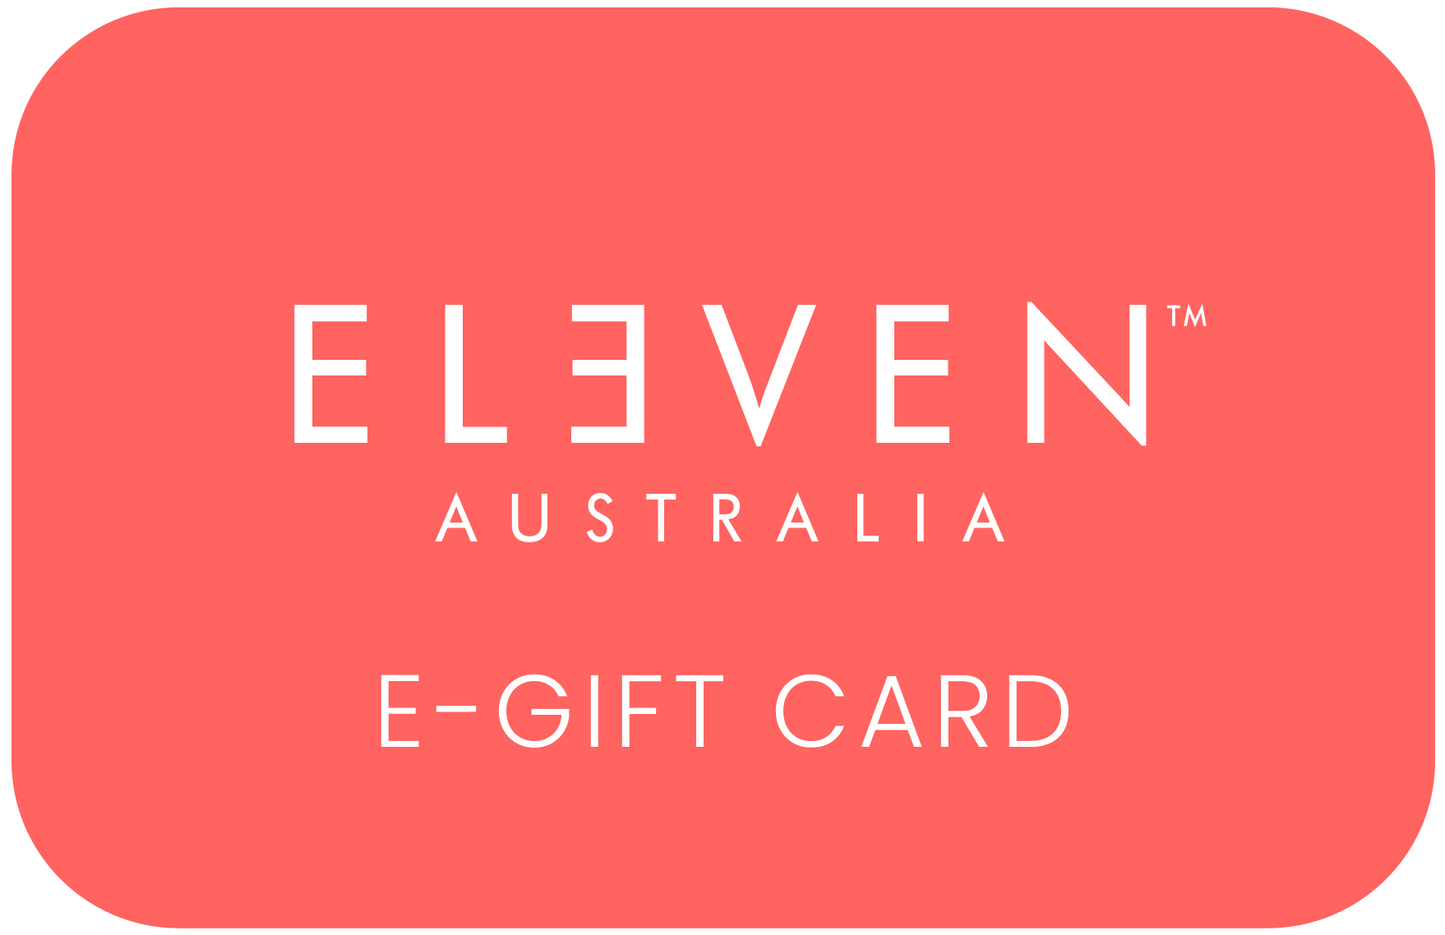 ELEVEN Australia E-Gift Card